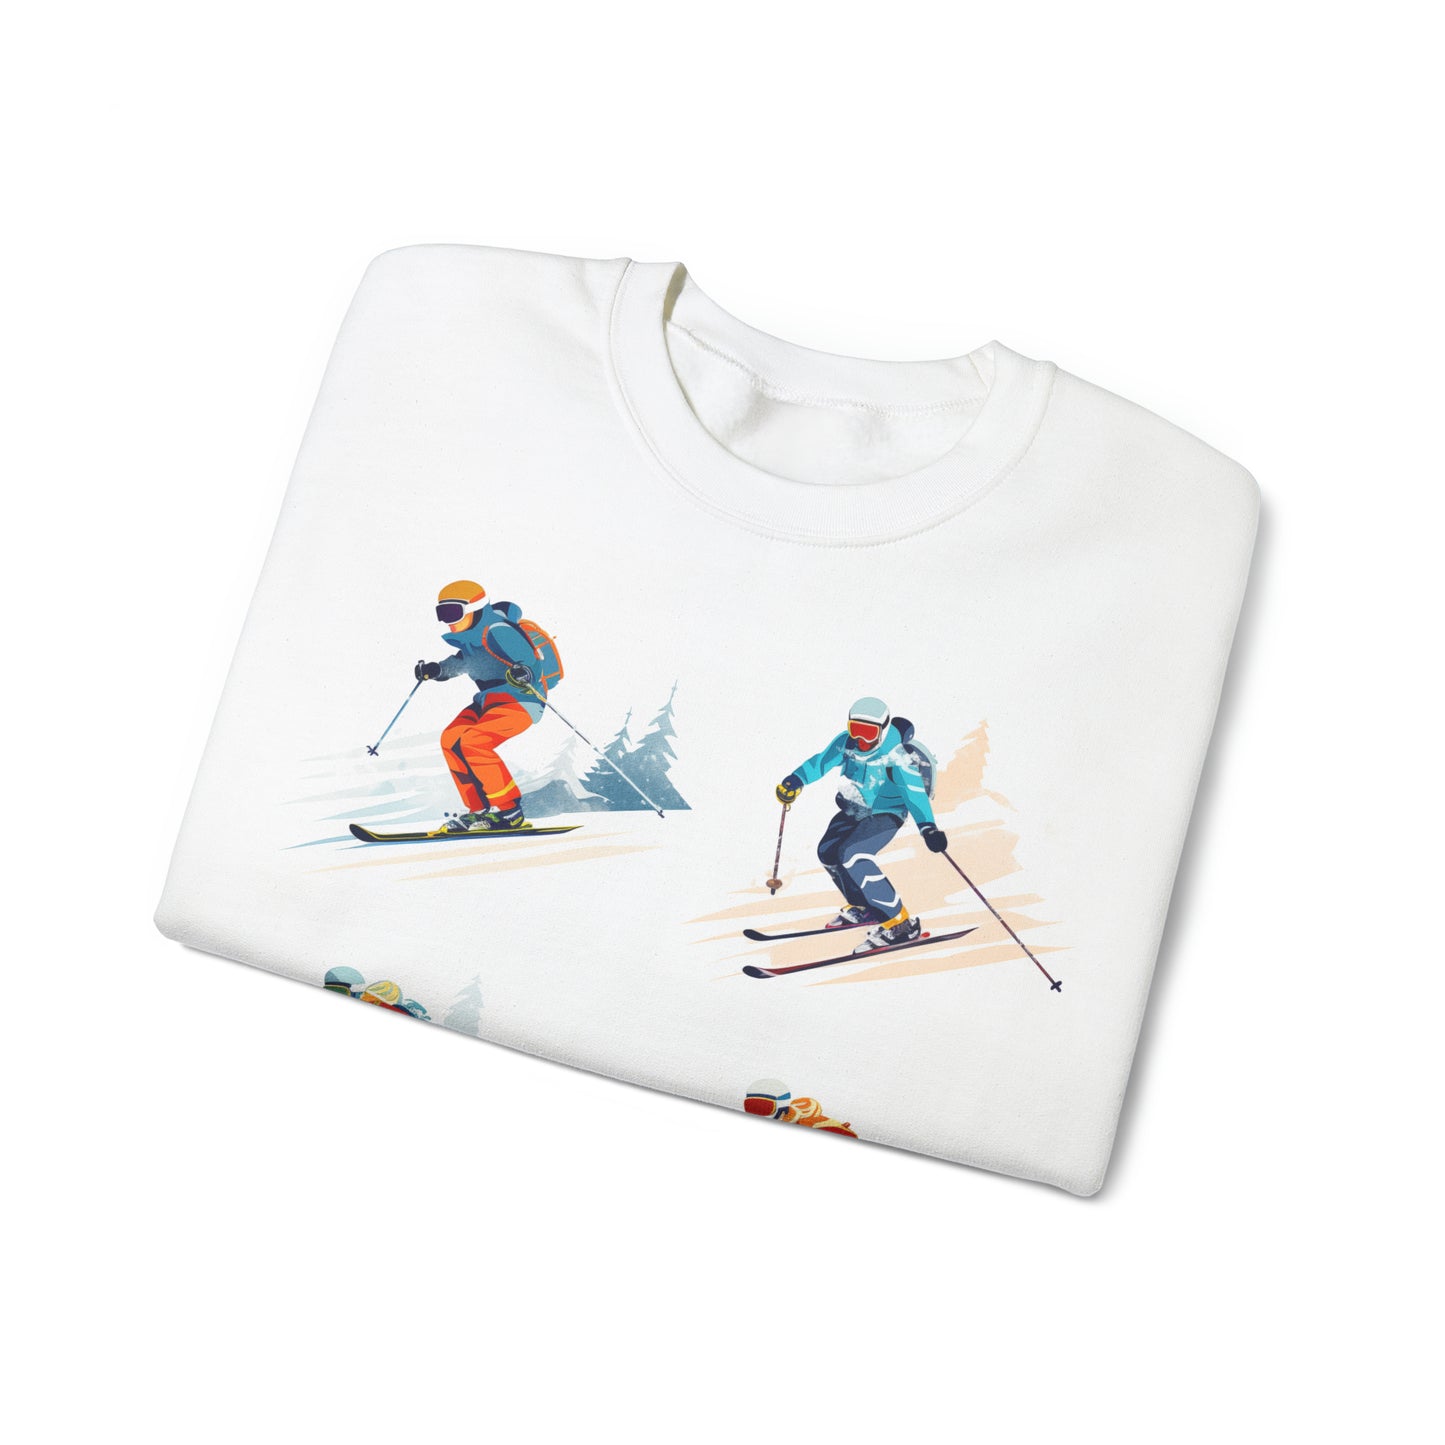 Ski Sweatshirt, Minimalist White Sweater Women Men Winter Sport Skiing Skier Snow Vintage Retro Cotton Holiday Christmas Mountain